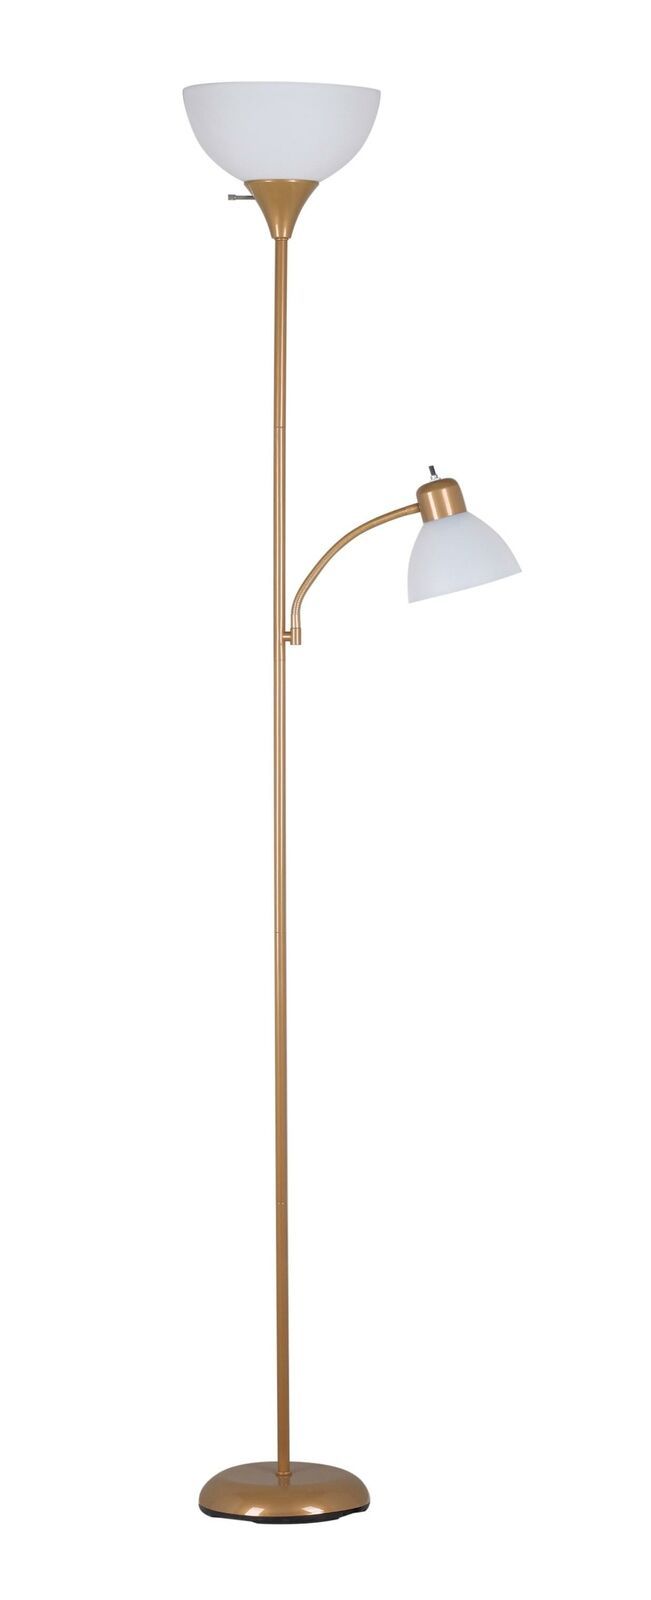 72 Inch Floor Lamp Reading Light Metal Uplight Stand Living Room Bedroom |  Ebay For 72 Inch Floor Lamps (View 10 of 15)